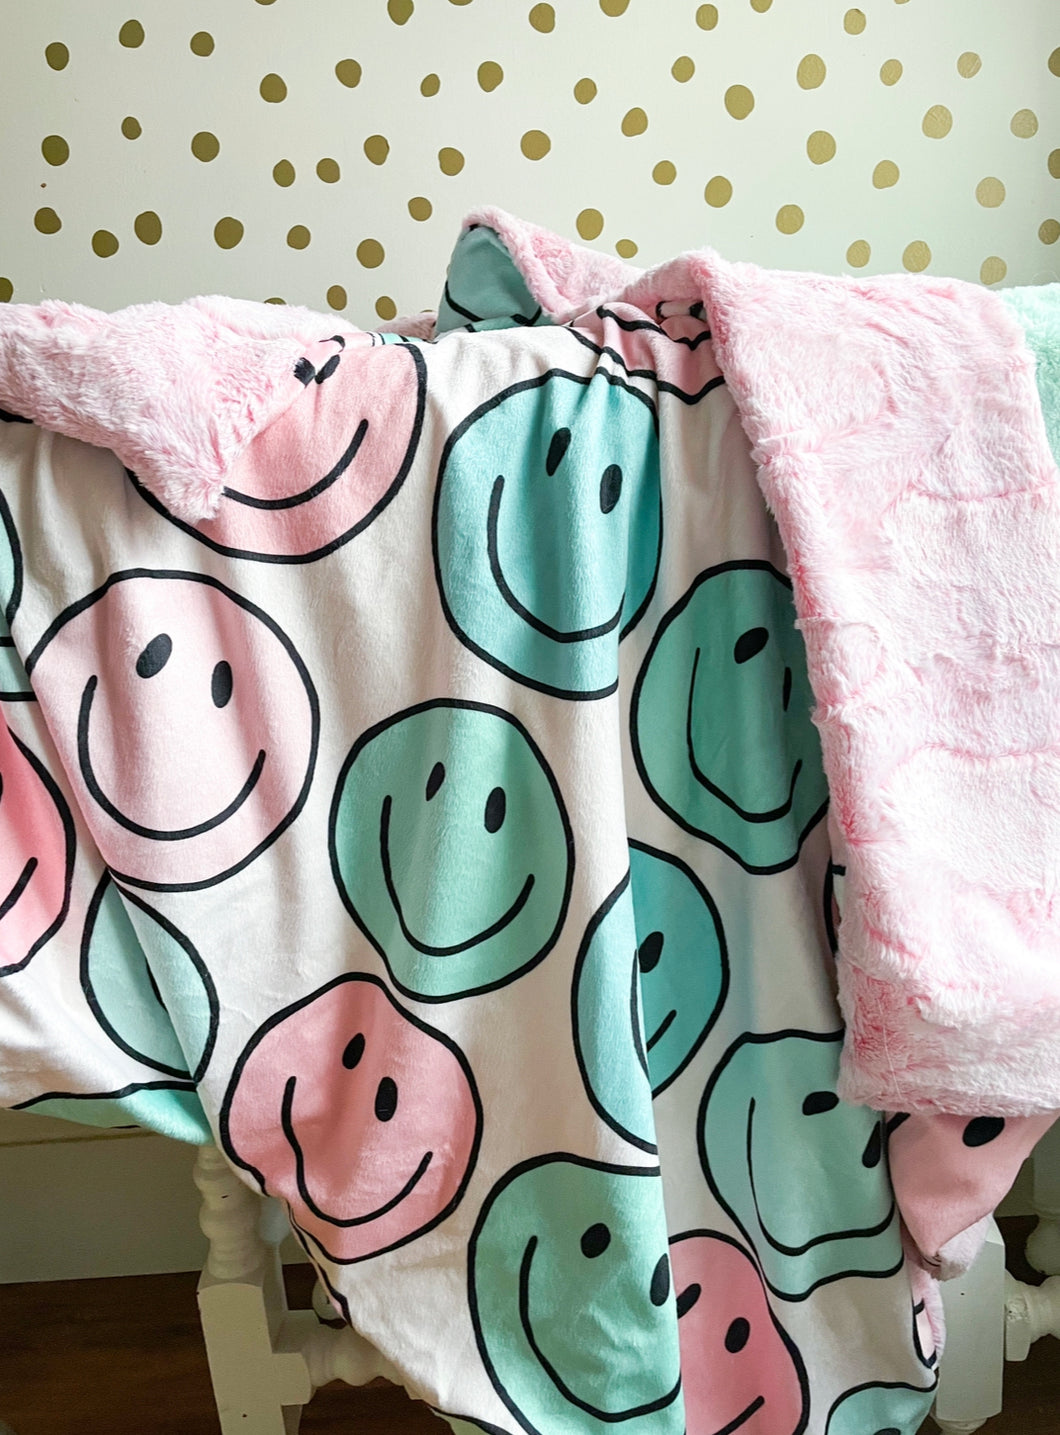 Smiley face adult snuggle blanket